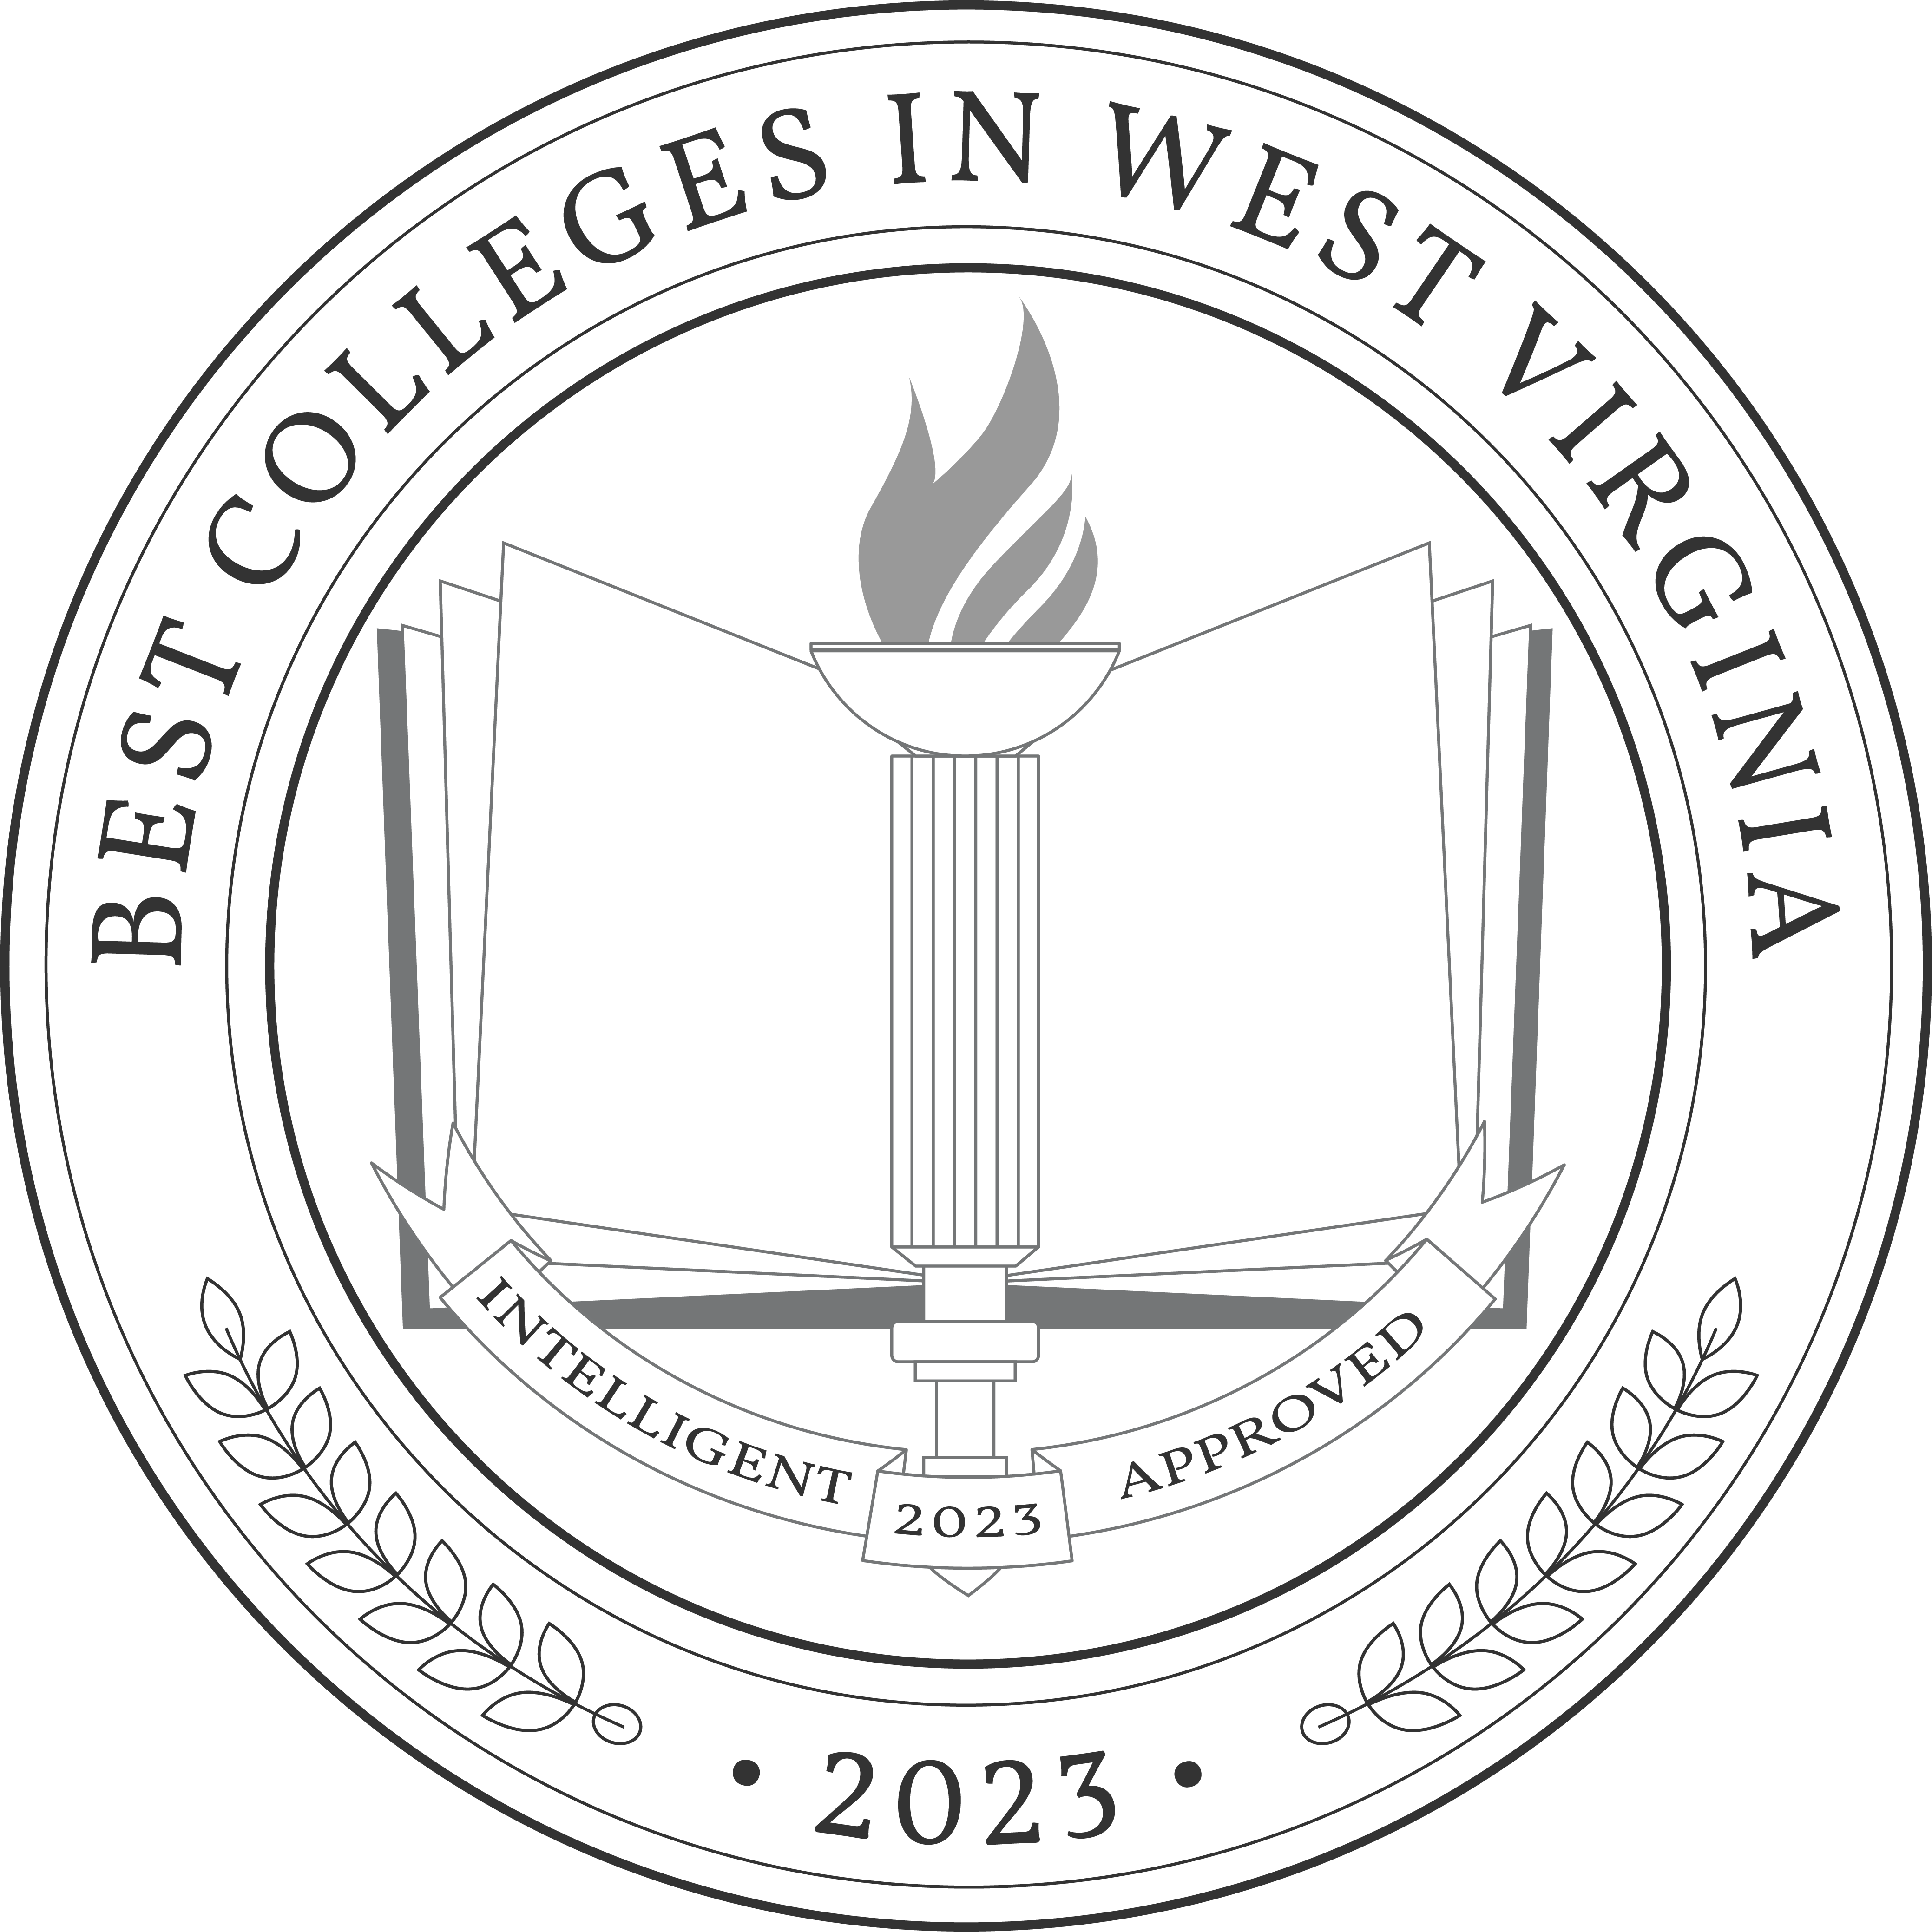 Best Colleges in West Virginia 2023 Badge